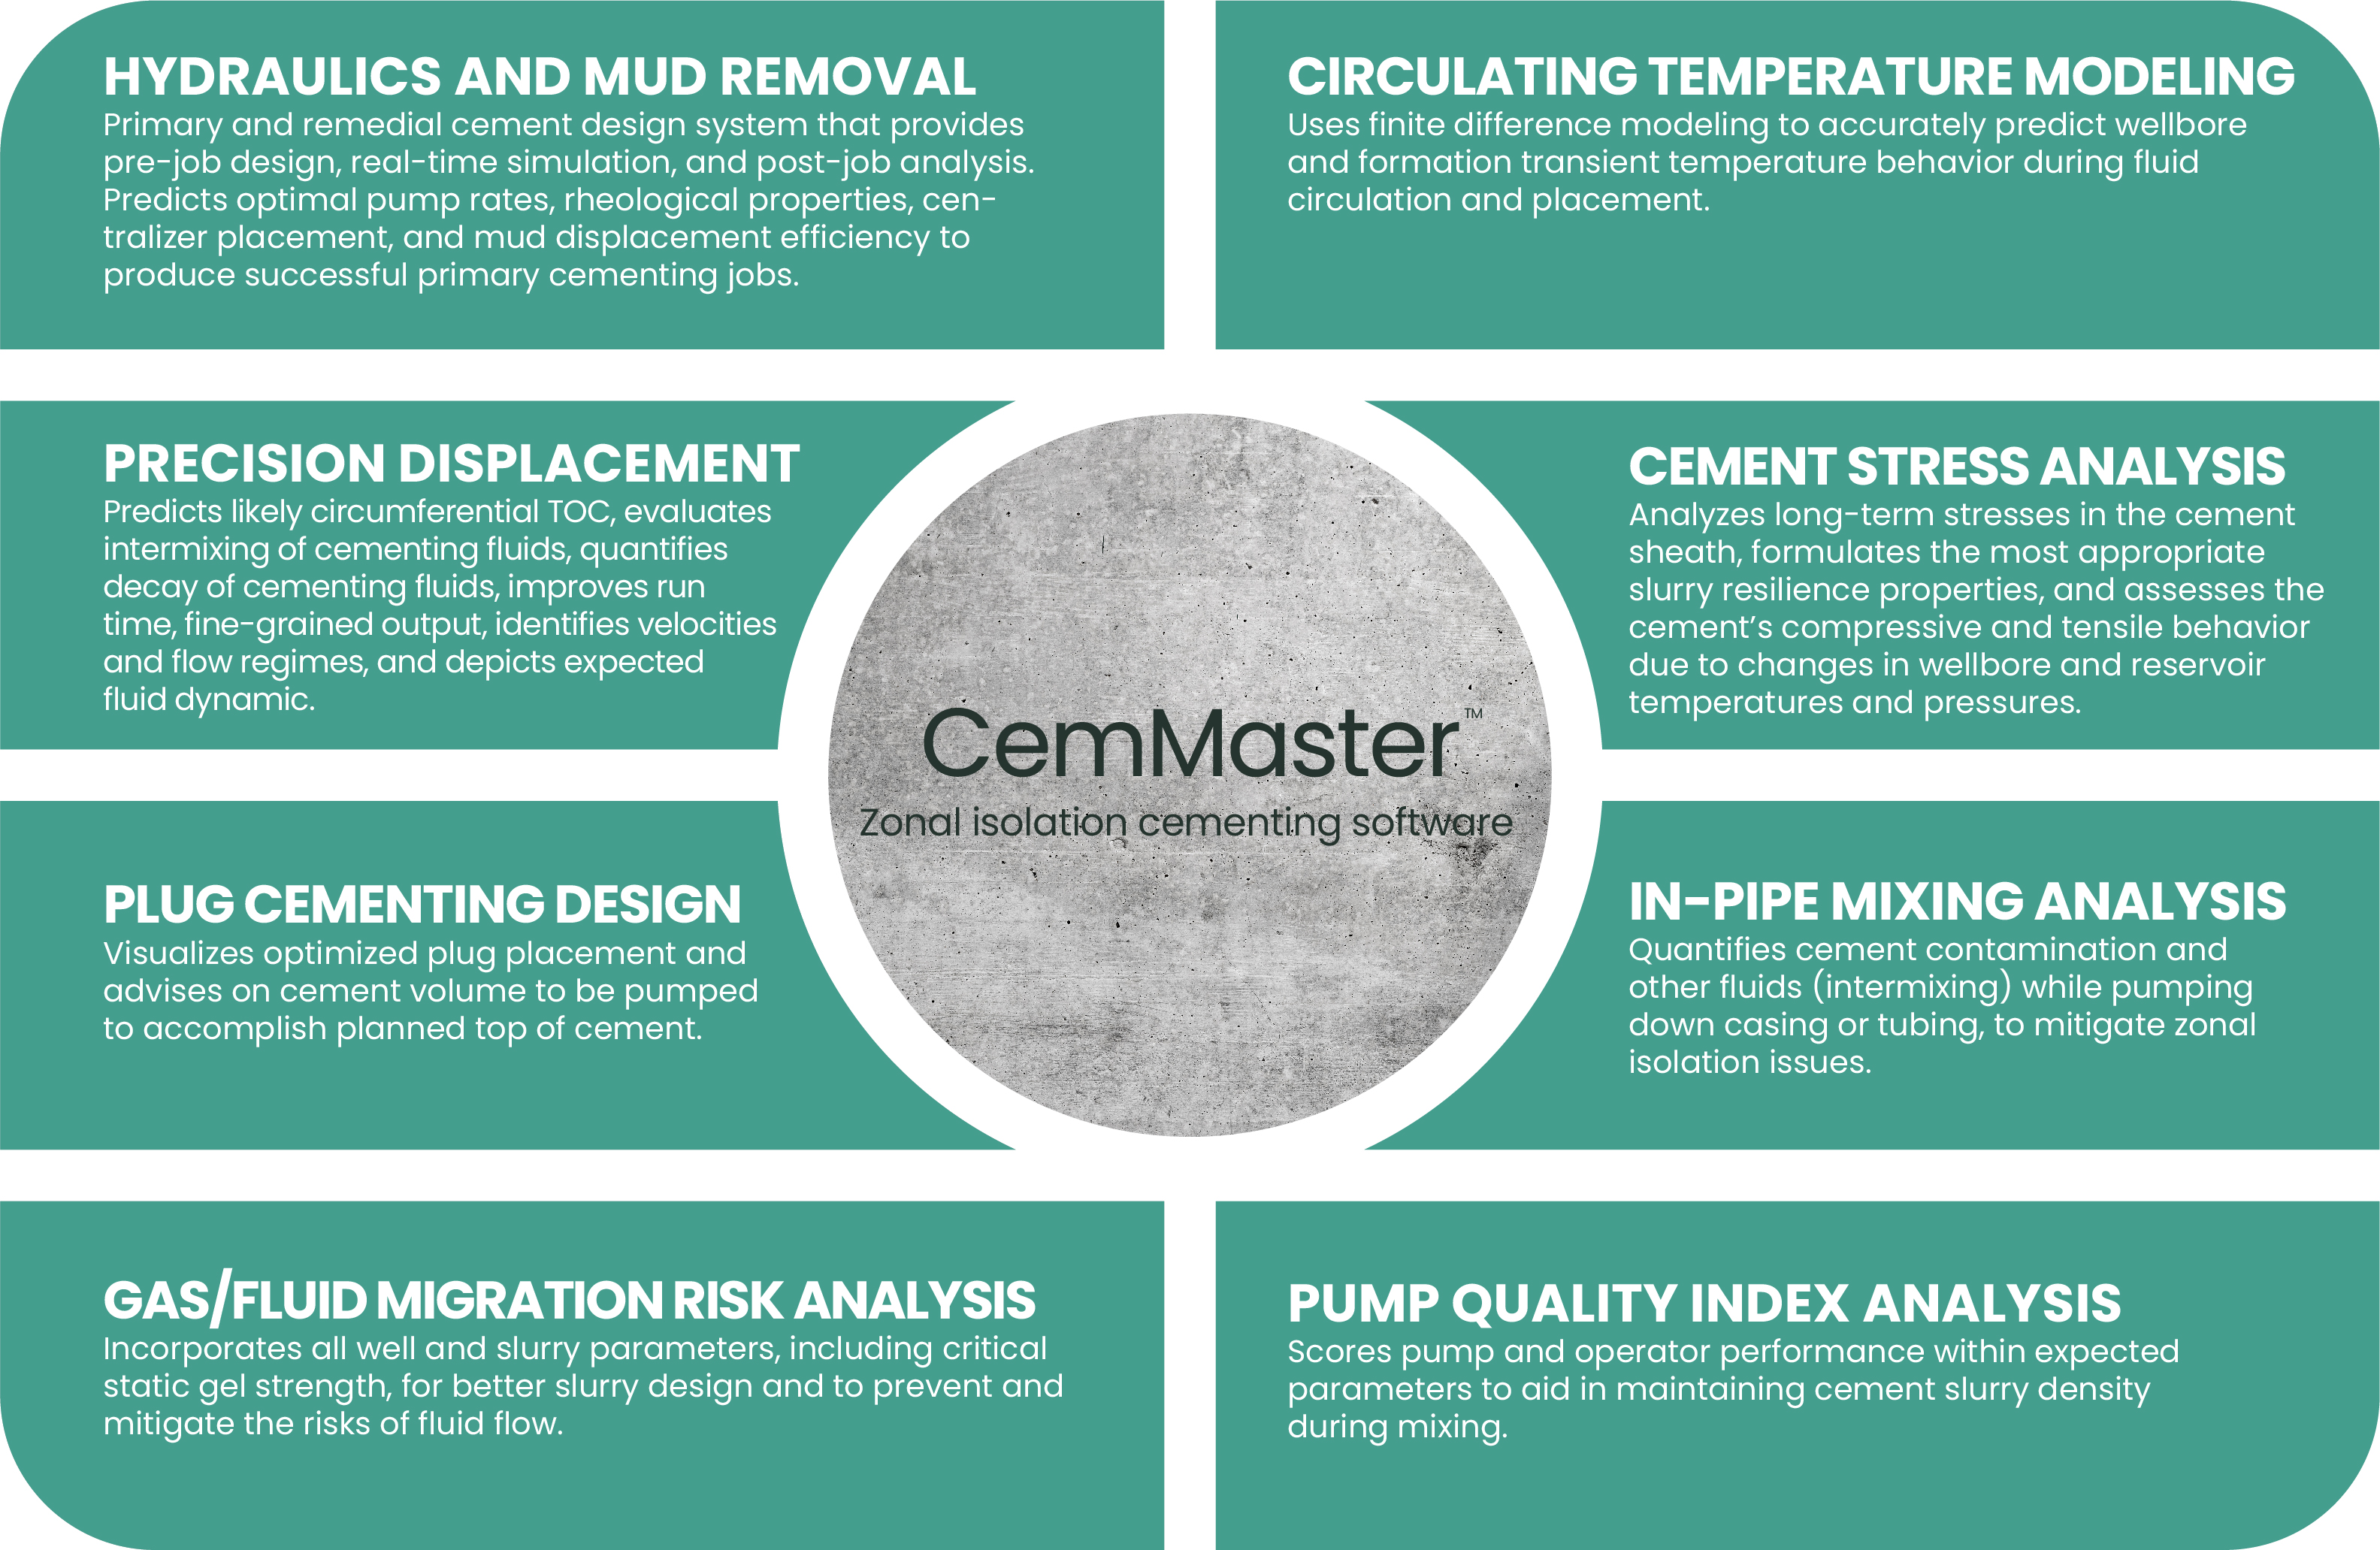 CemMaster module